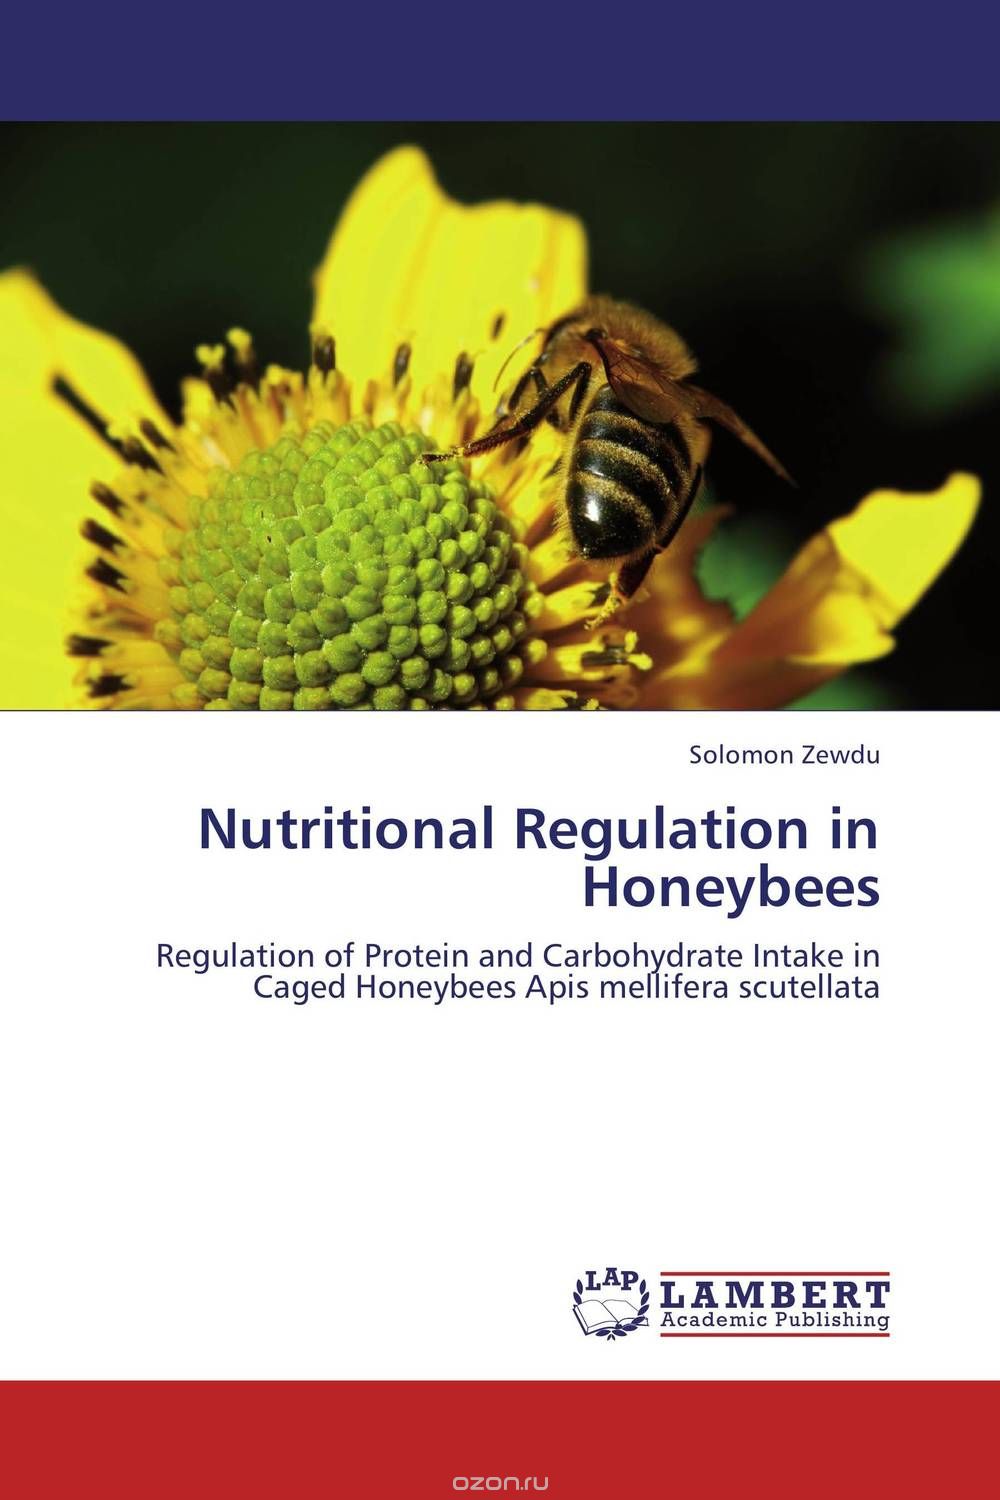 Скачать книгу "Nutritional Regulation in Honeybees"